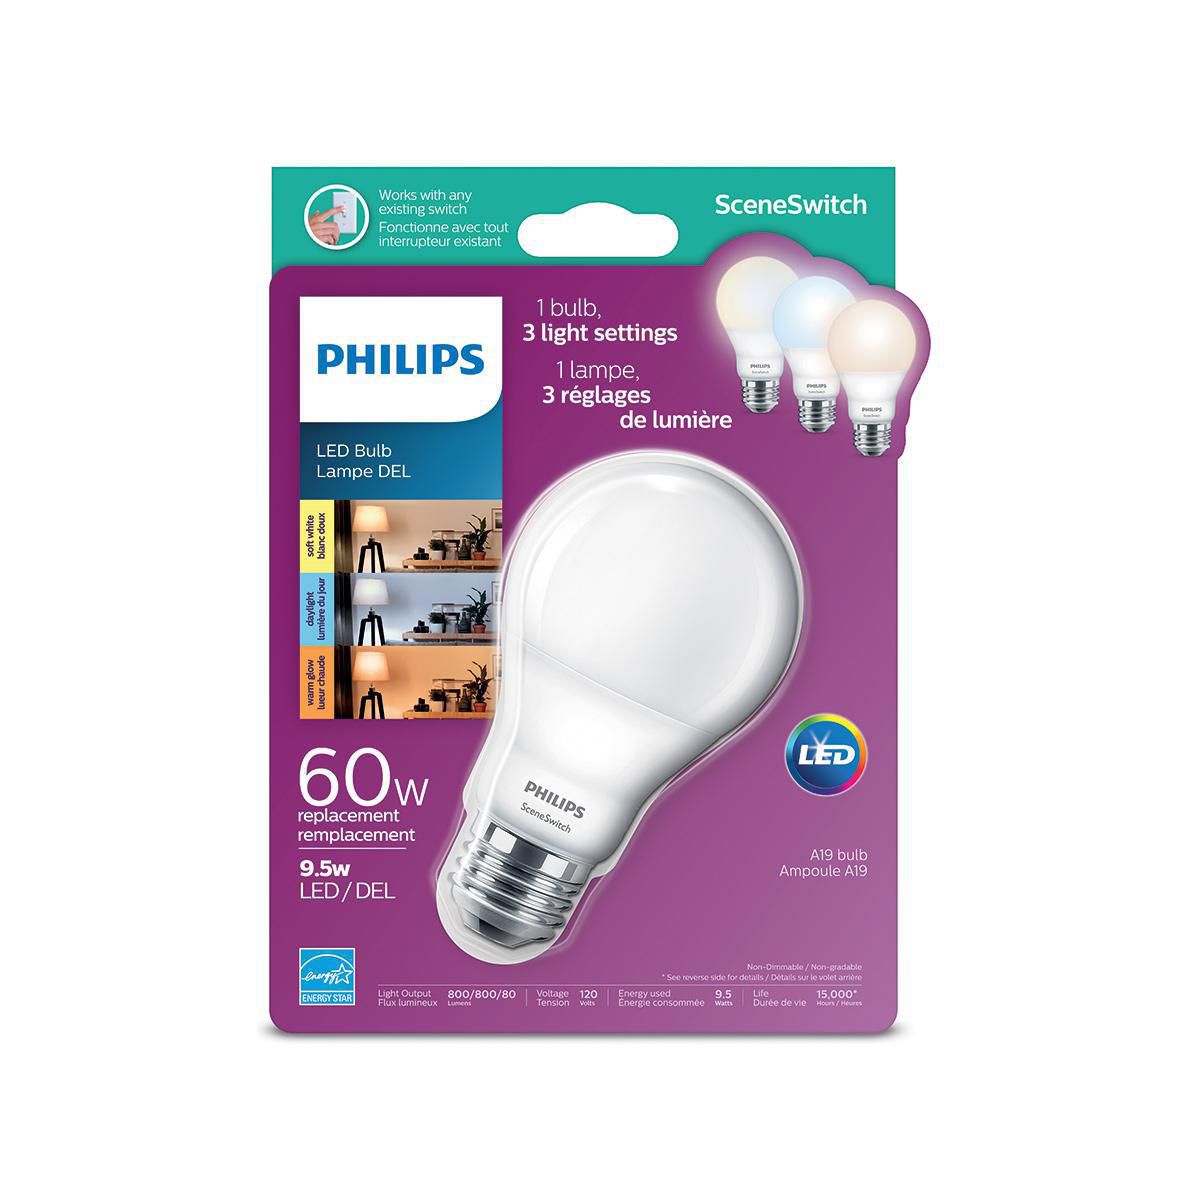 na school Maan vermoeidheid PHILIPS LED 60W A19 SceneSwitch bulb | Walmart Canada